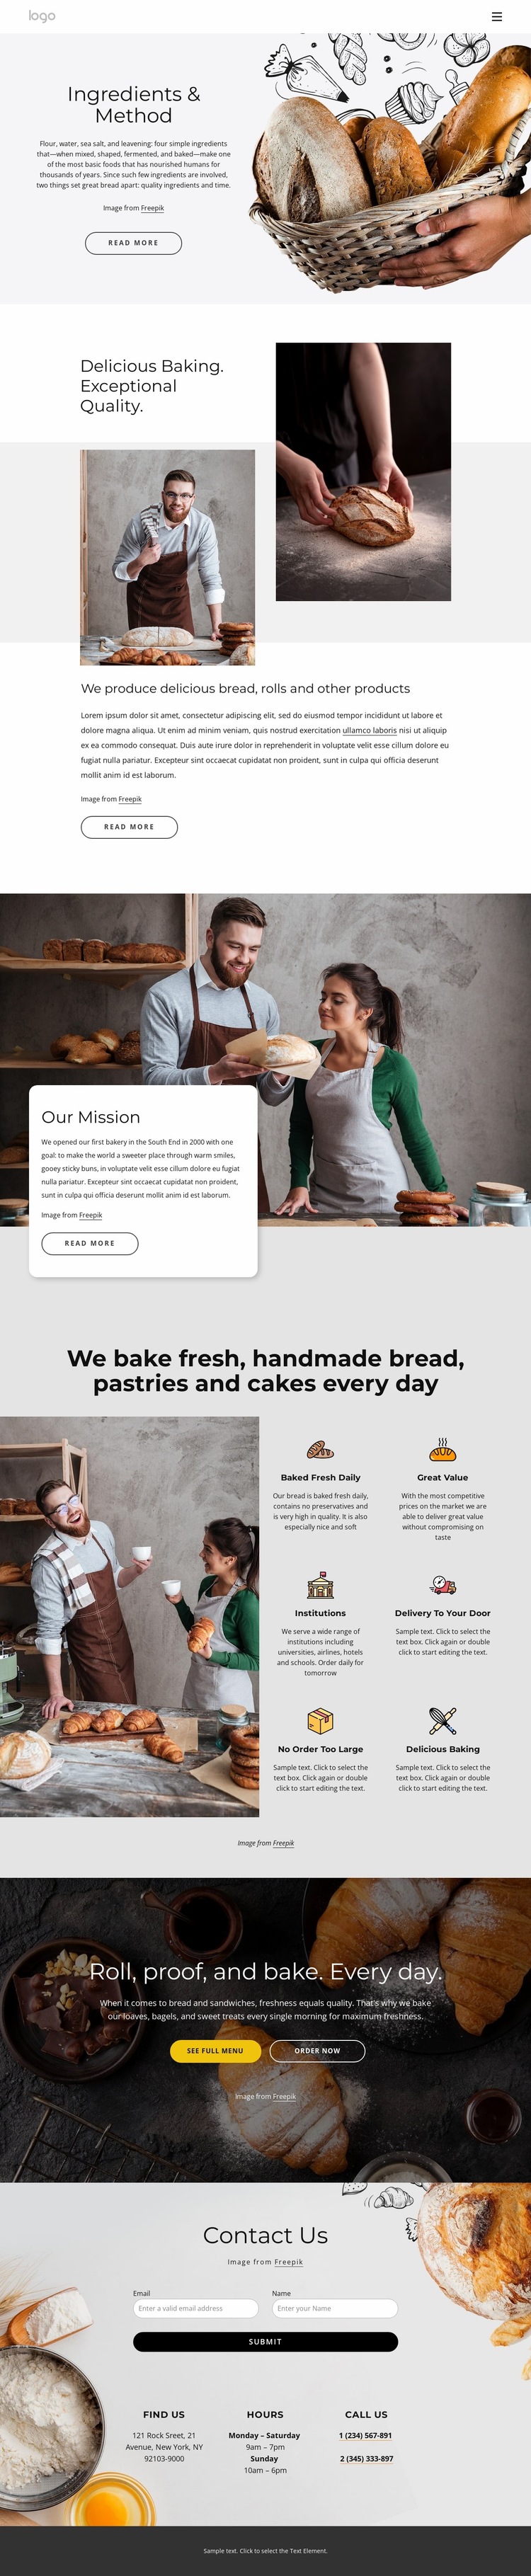 We bake handmade bread Website Builder Templates